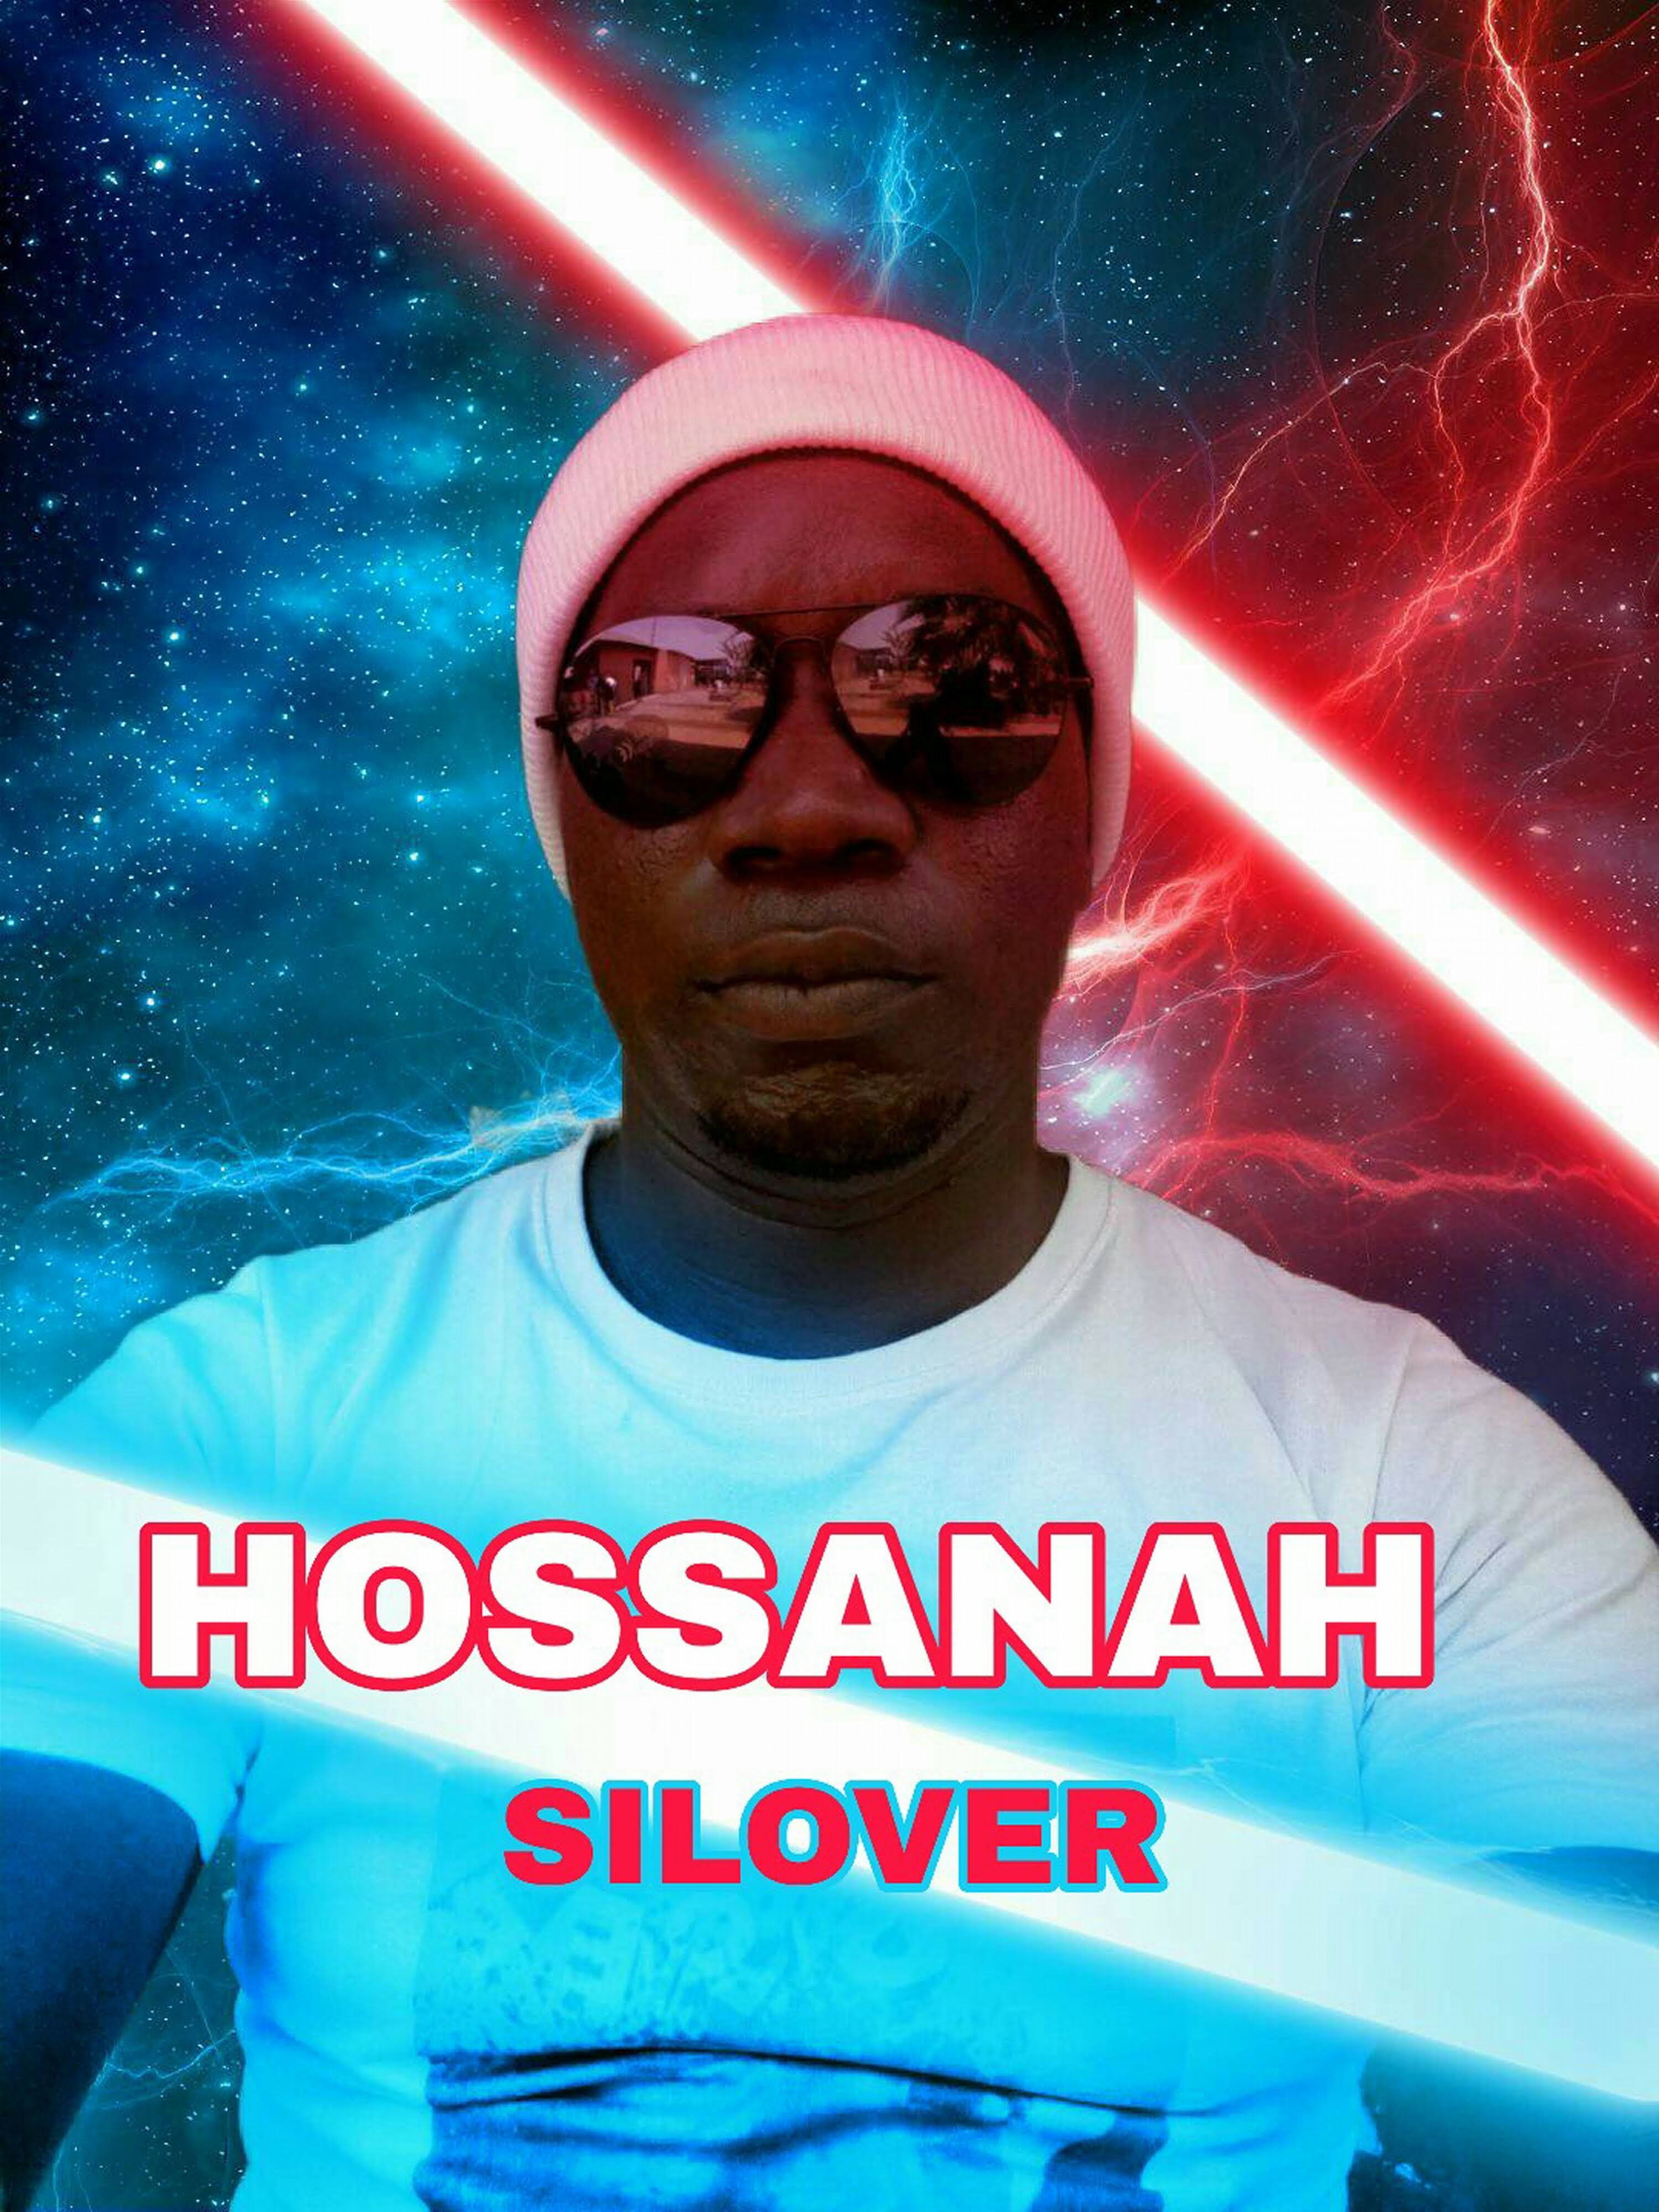 HOSSANAH